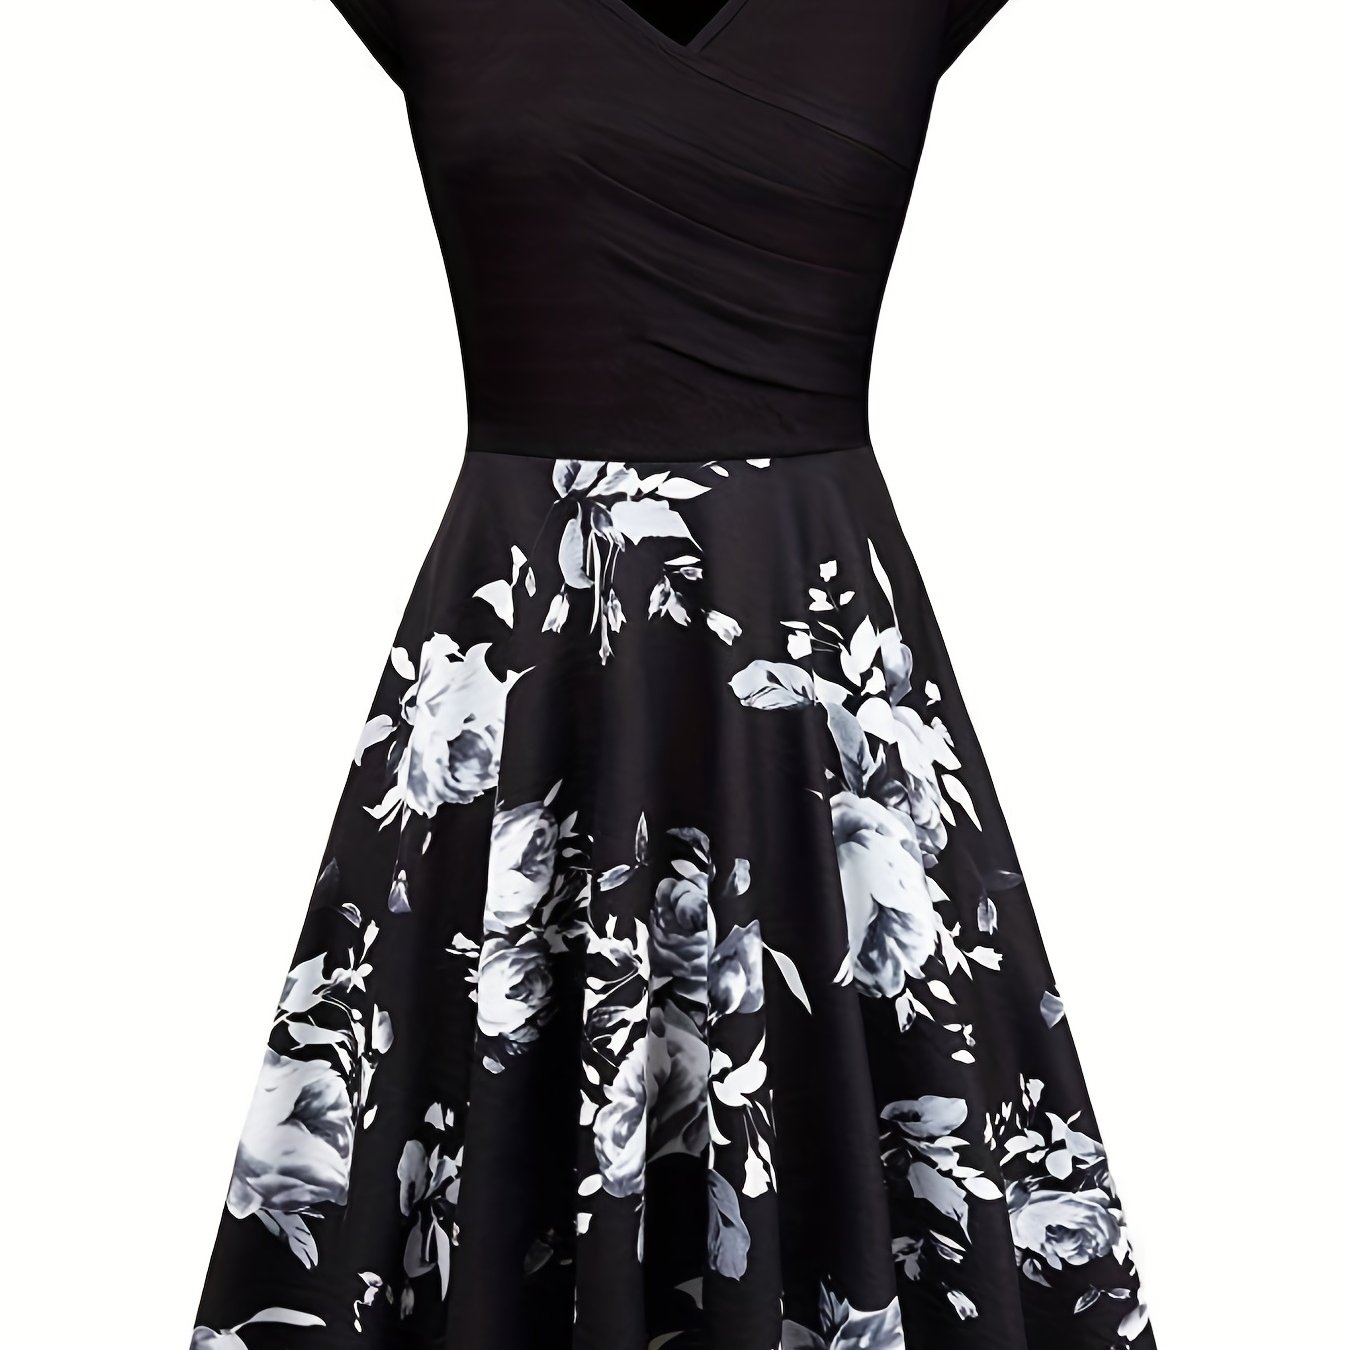 floral print v neck dress elegant short sleeve dress for spring summer womens clothing